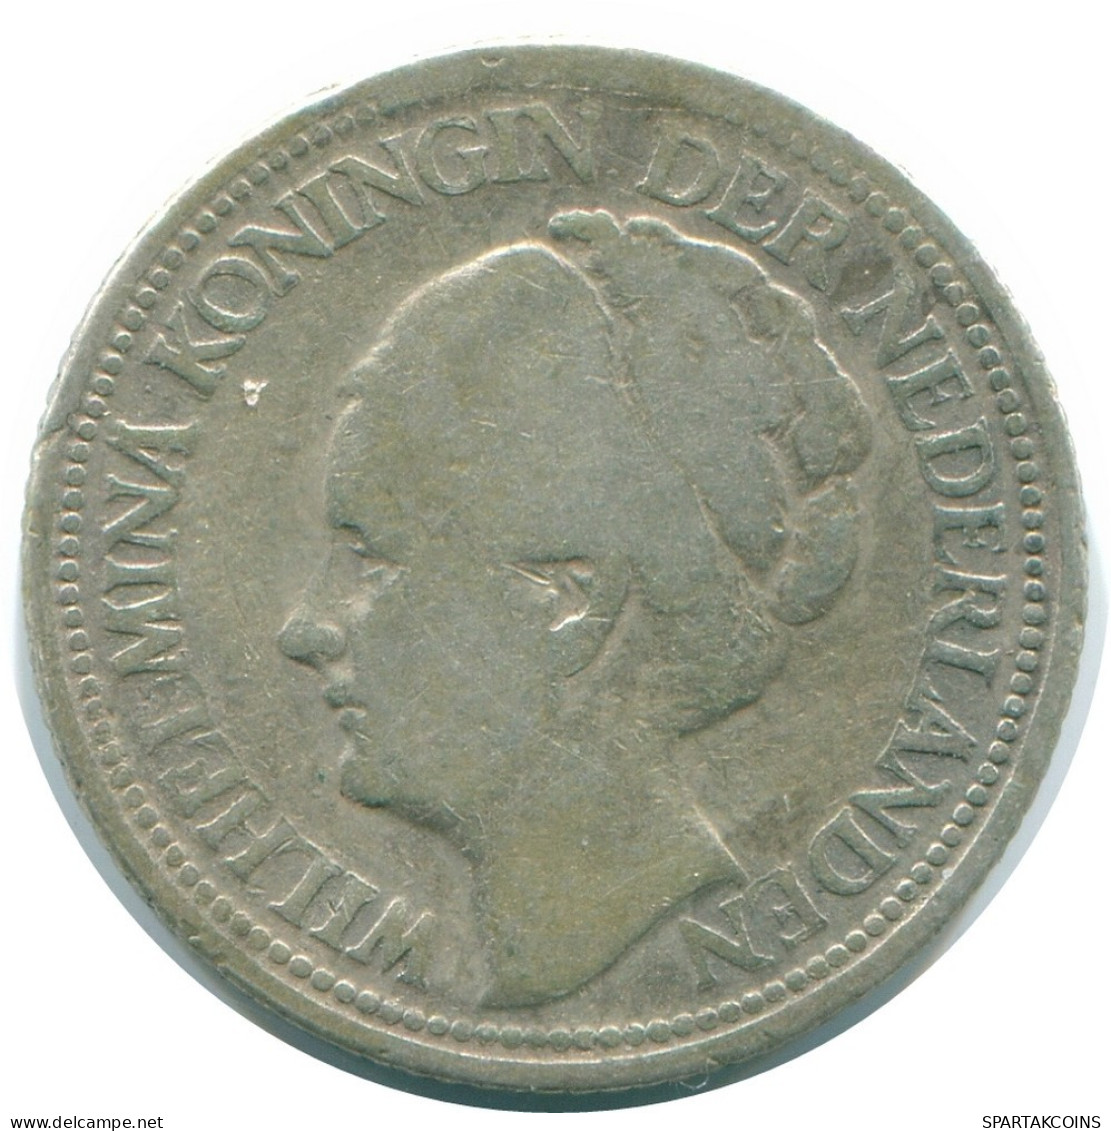 1/4 GULDEN 1947 CURACAO Netherlands SILVER Colonial Coin #NL10757.4.U.A - Curaçao